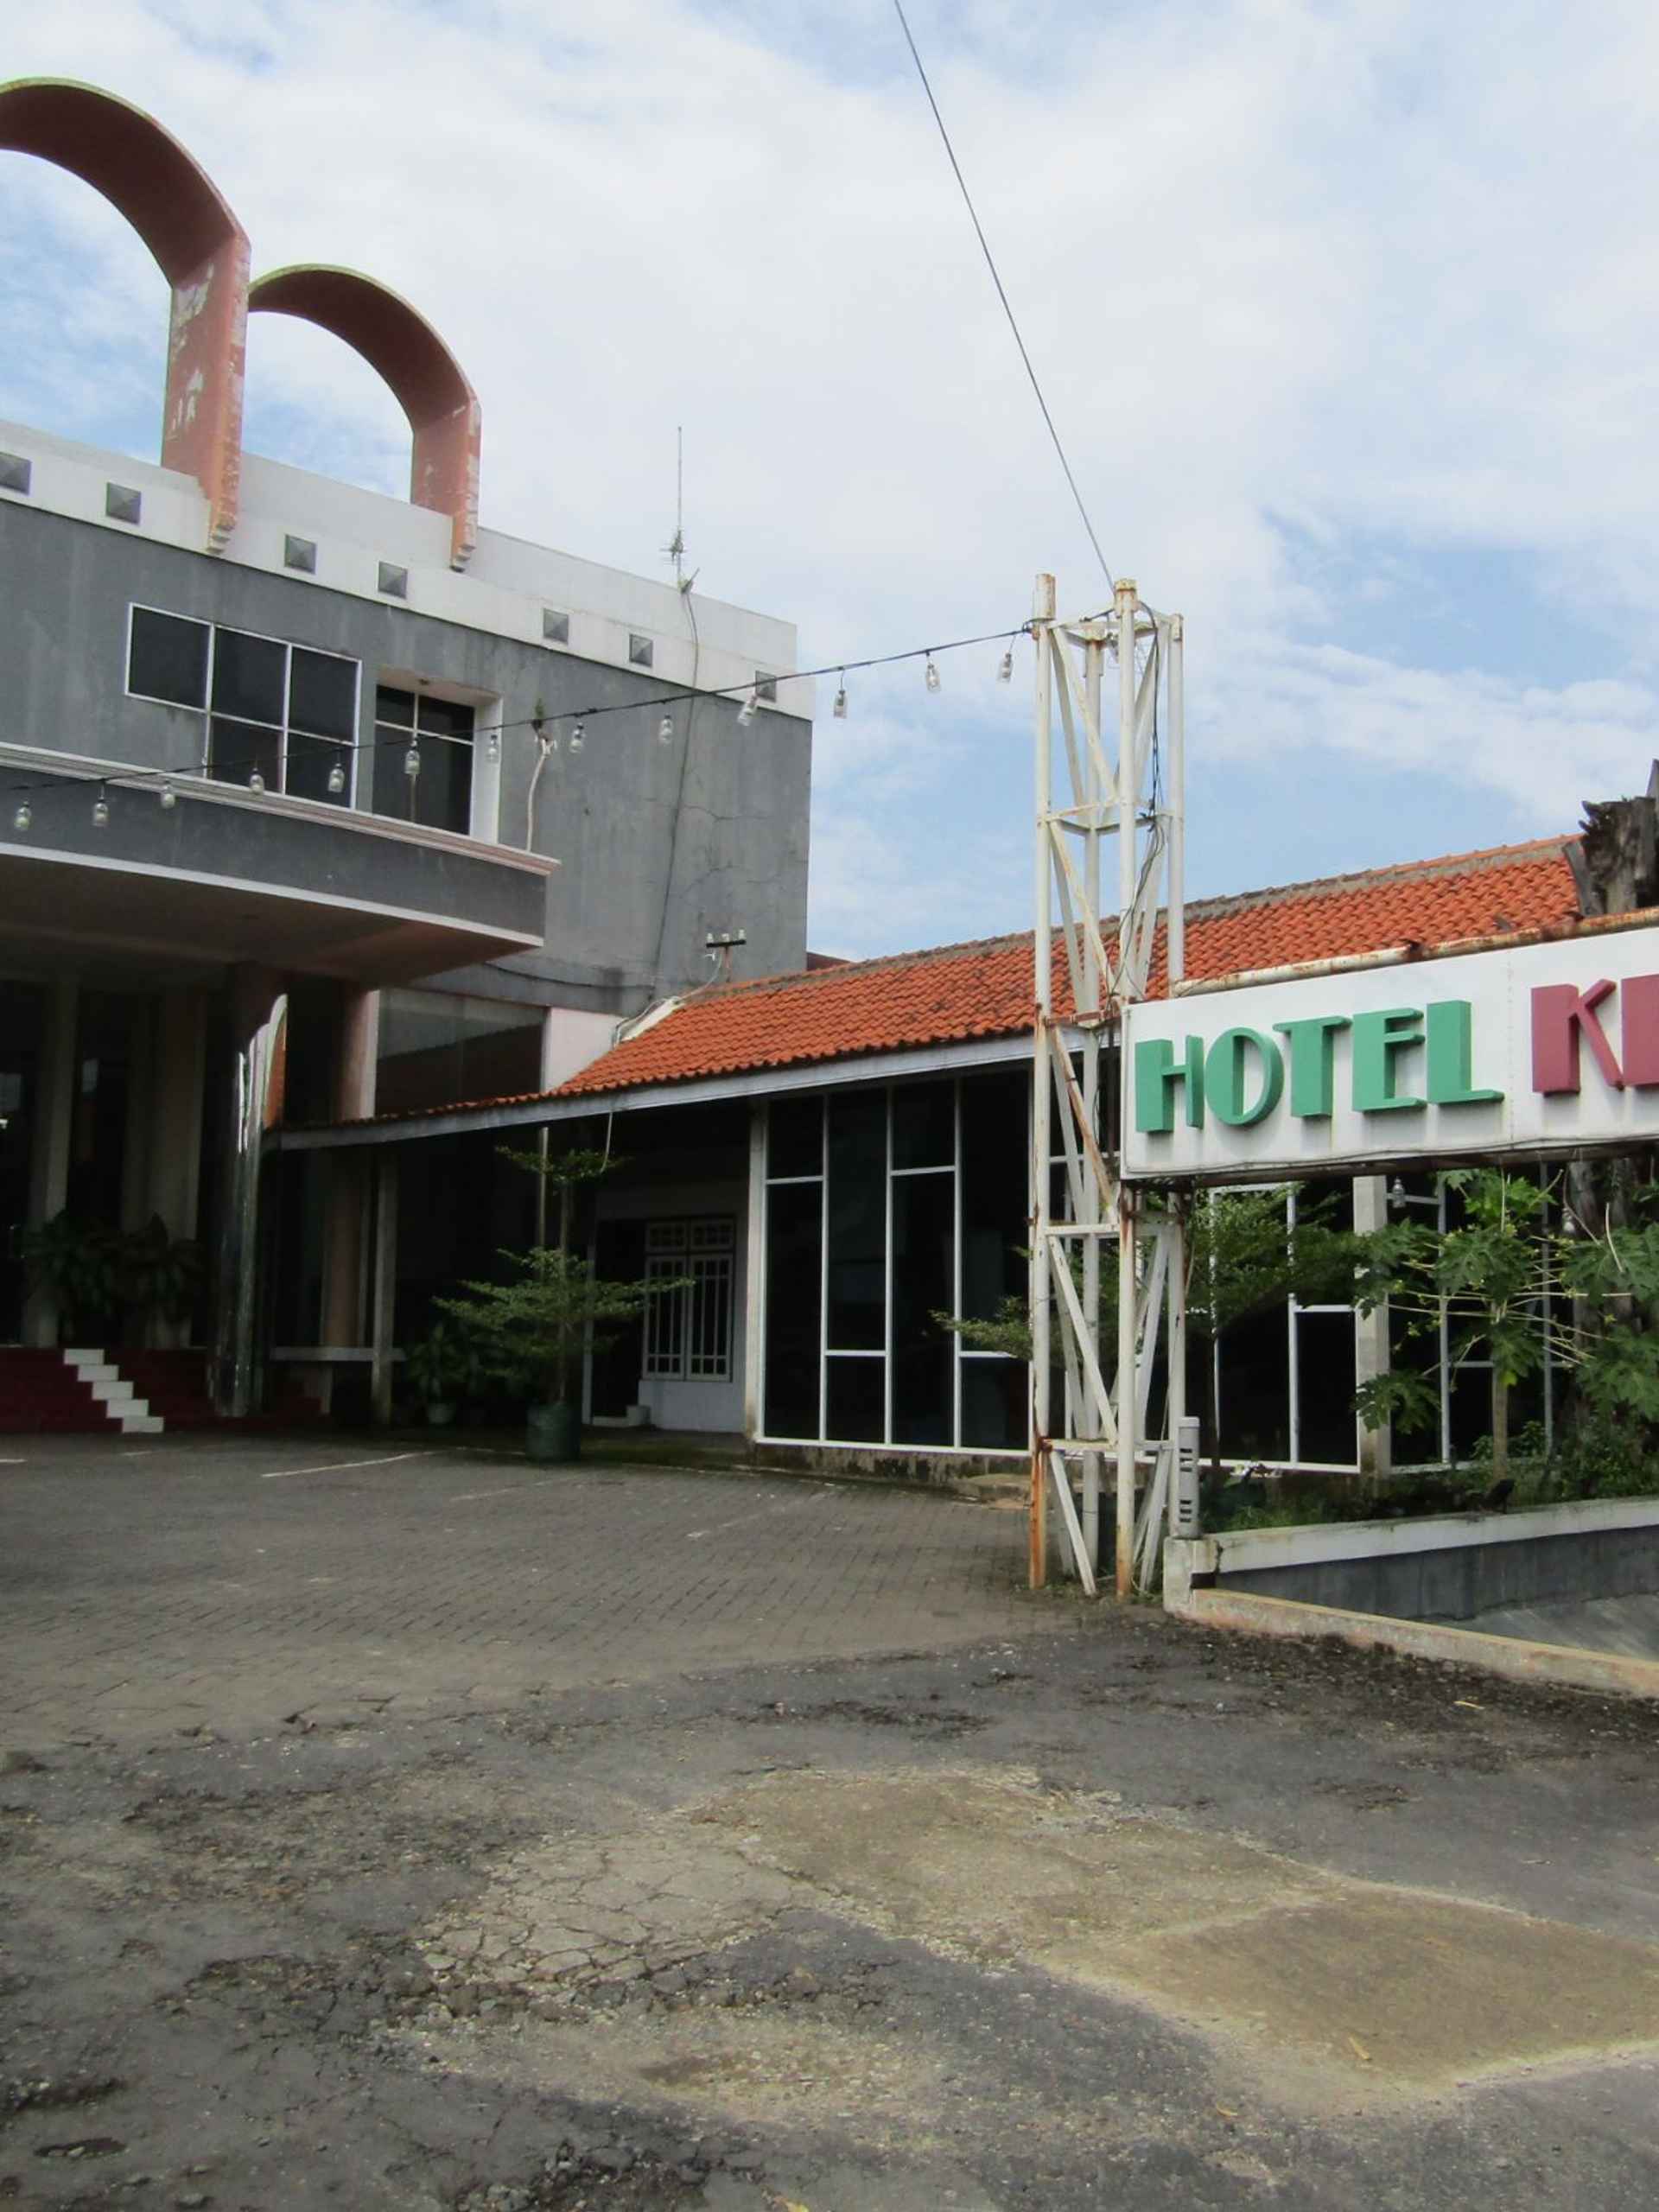 Bangunan Hotel Kencana Jaya Jepara